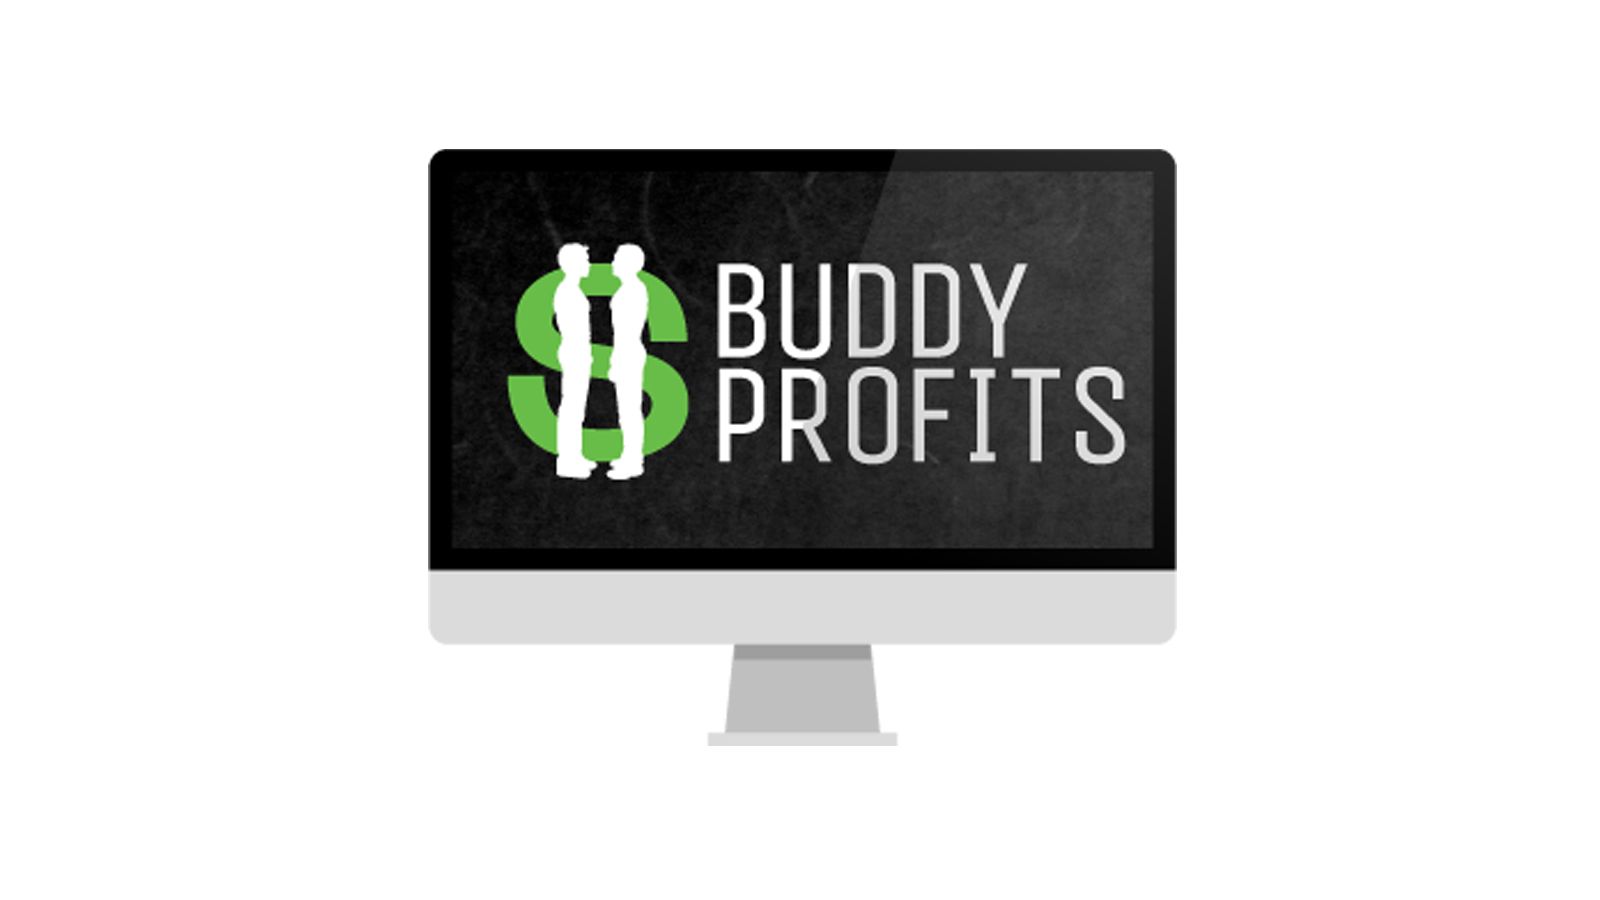 Buddy Profits to Sponsor GayVN at Webmaster Access